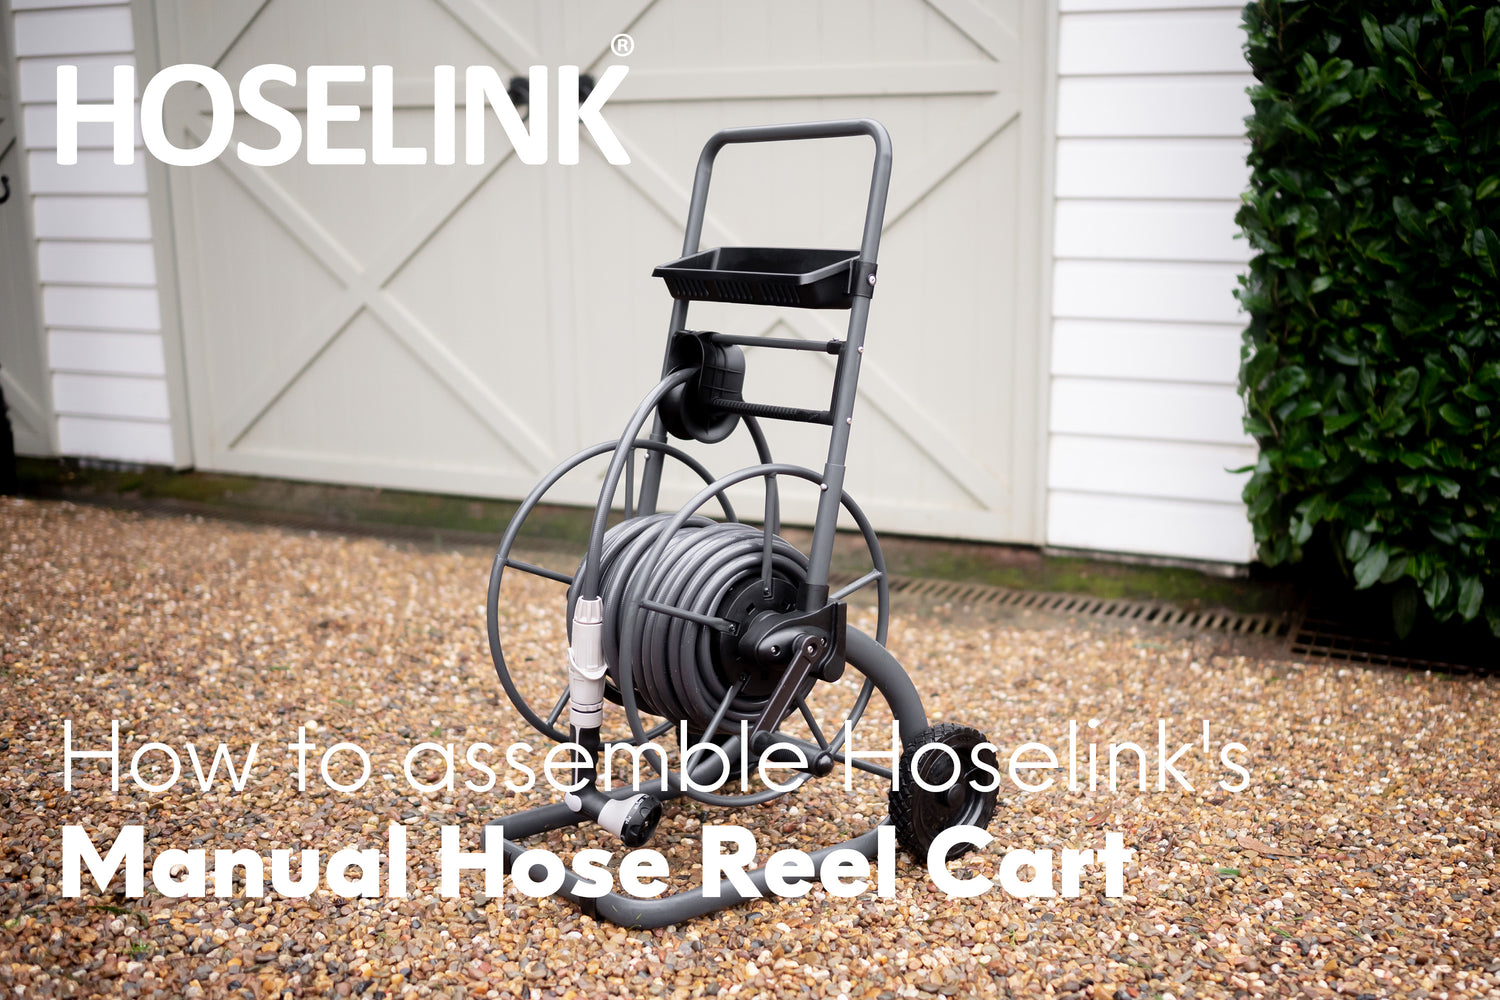 How to assemble Hoselink's Metal Hose Reel Cart